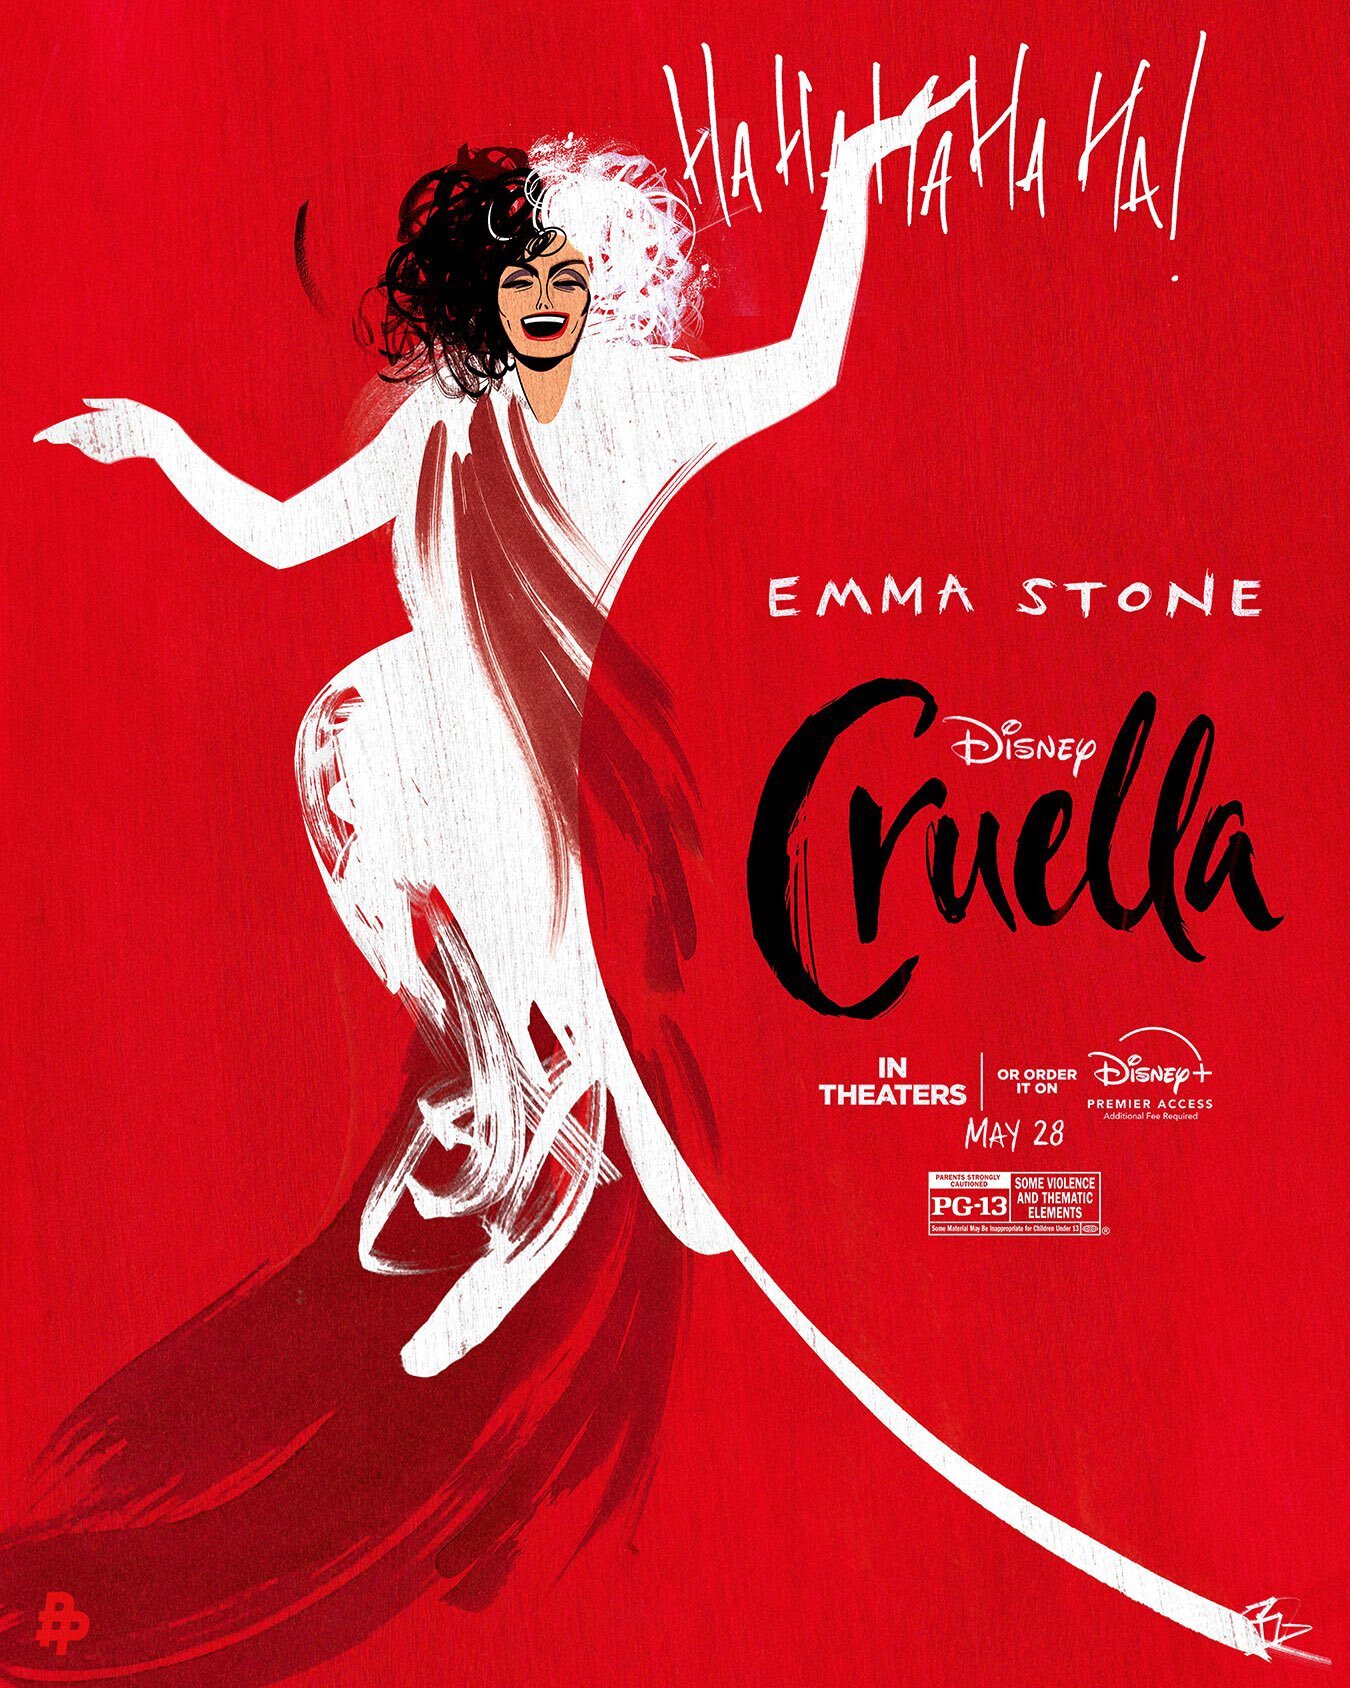   Cruella   Client: Disney (official art created via Poster Posse) 